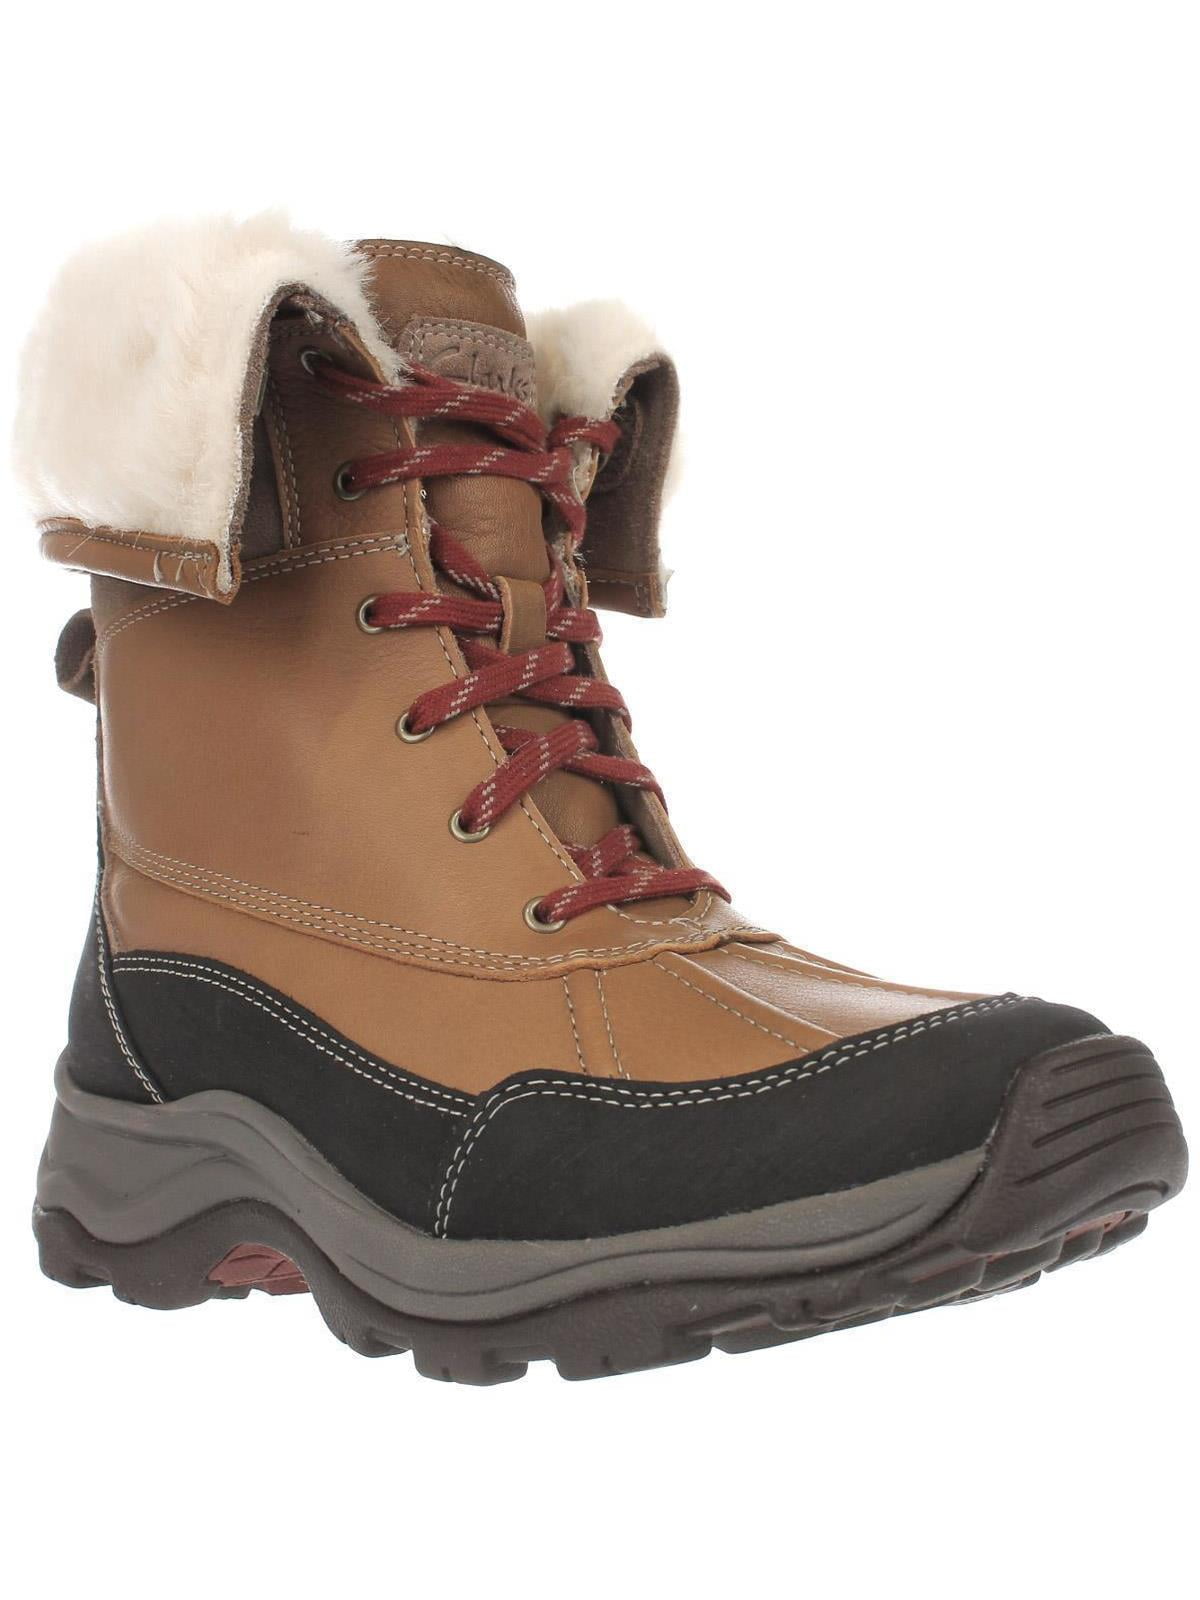 Womens Arctic Venture Waterproof Snow Boots, Camel, 7.5 US - Walmart.com